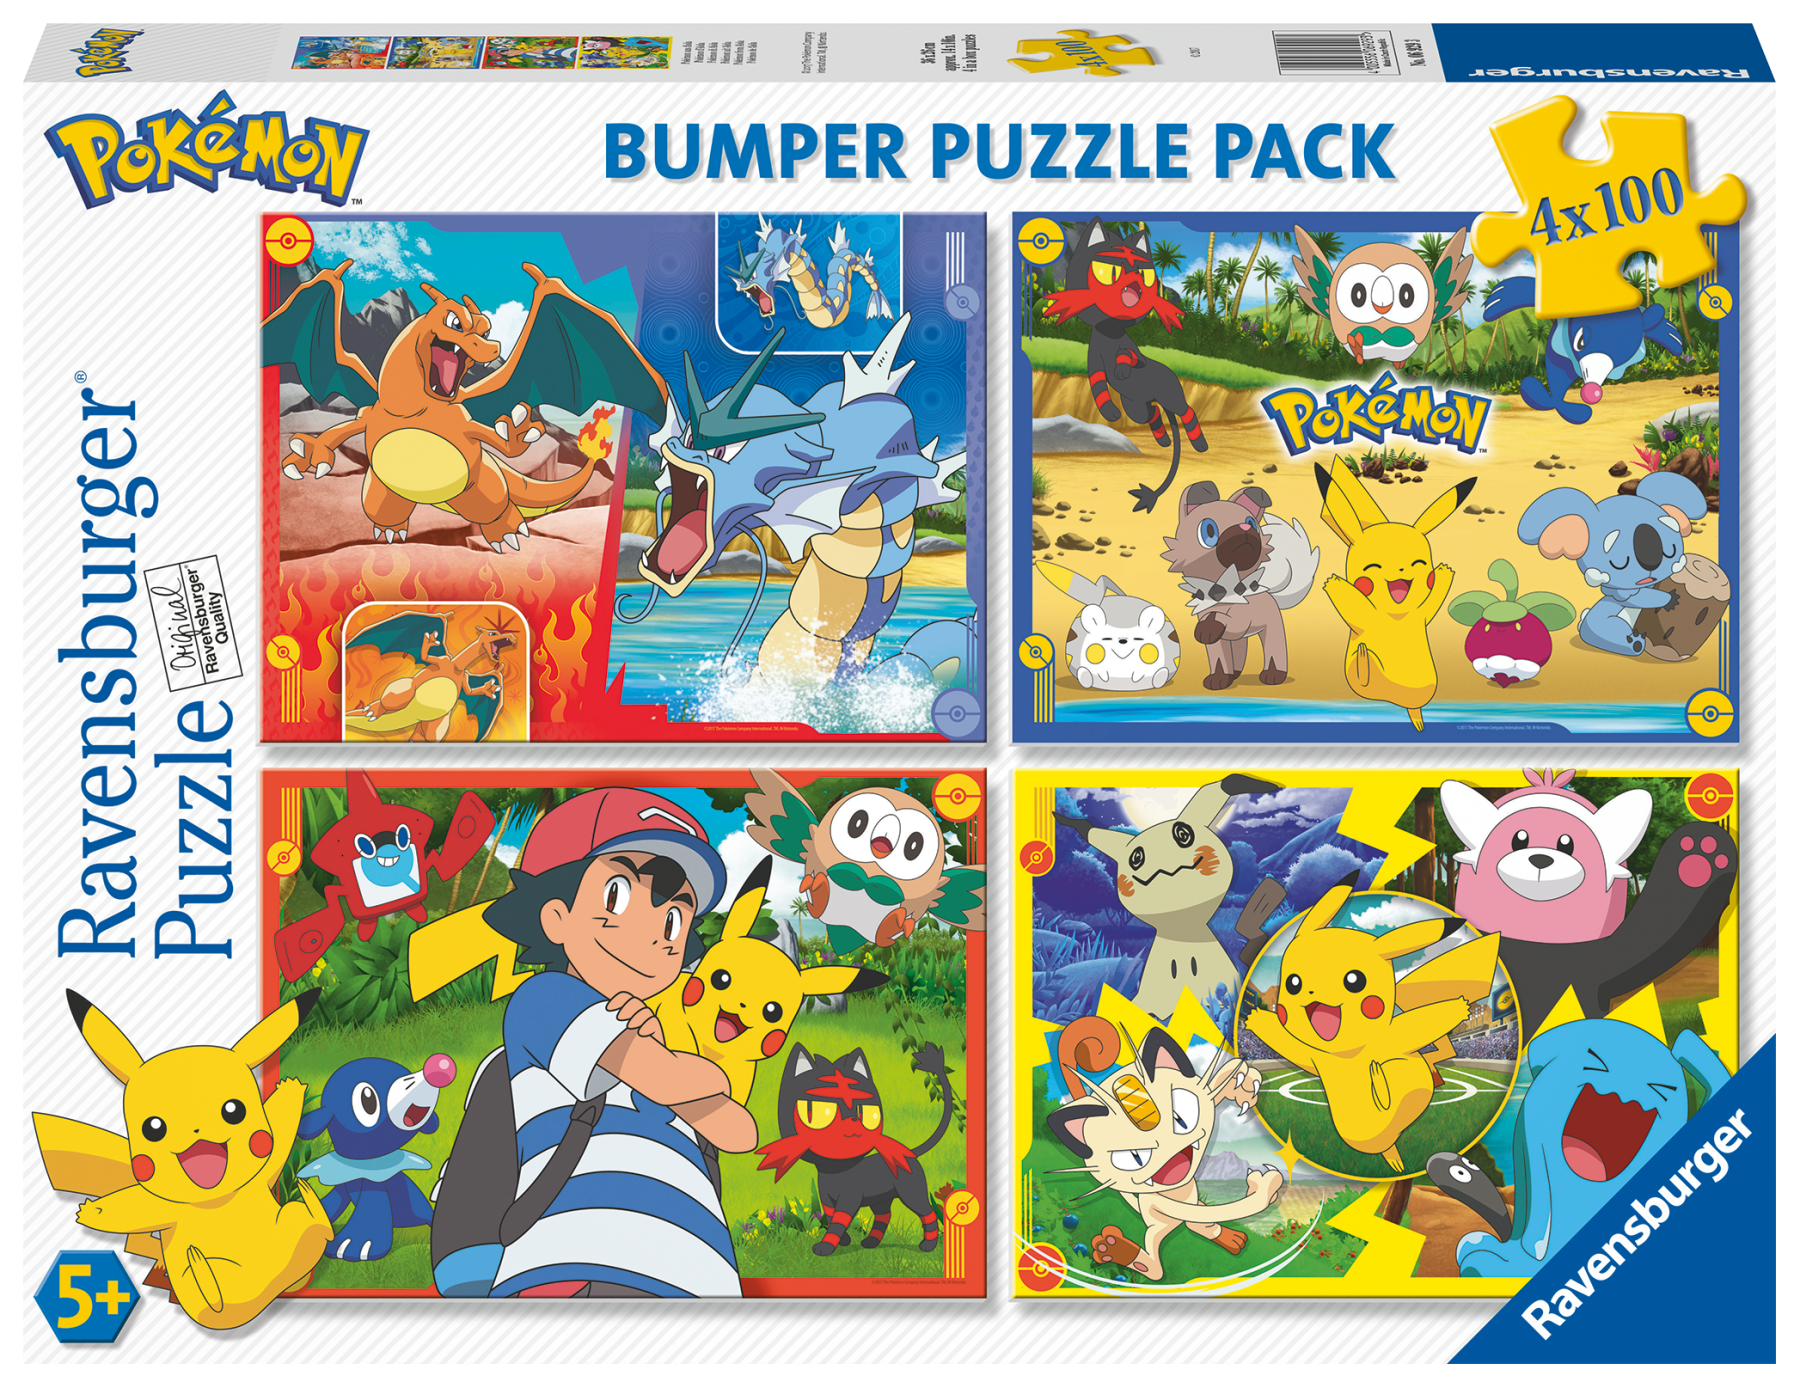 Ravensburger - puzzle pokémon, collezione bumper pack 4x100, 4 puzzle da 100 pezzi, età raccomandata 5+ anni - RAVENSBURGER